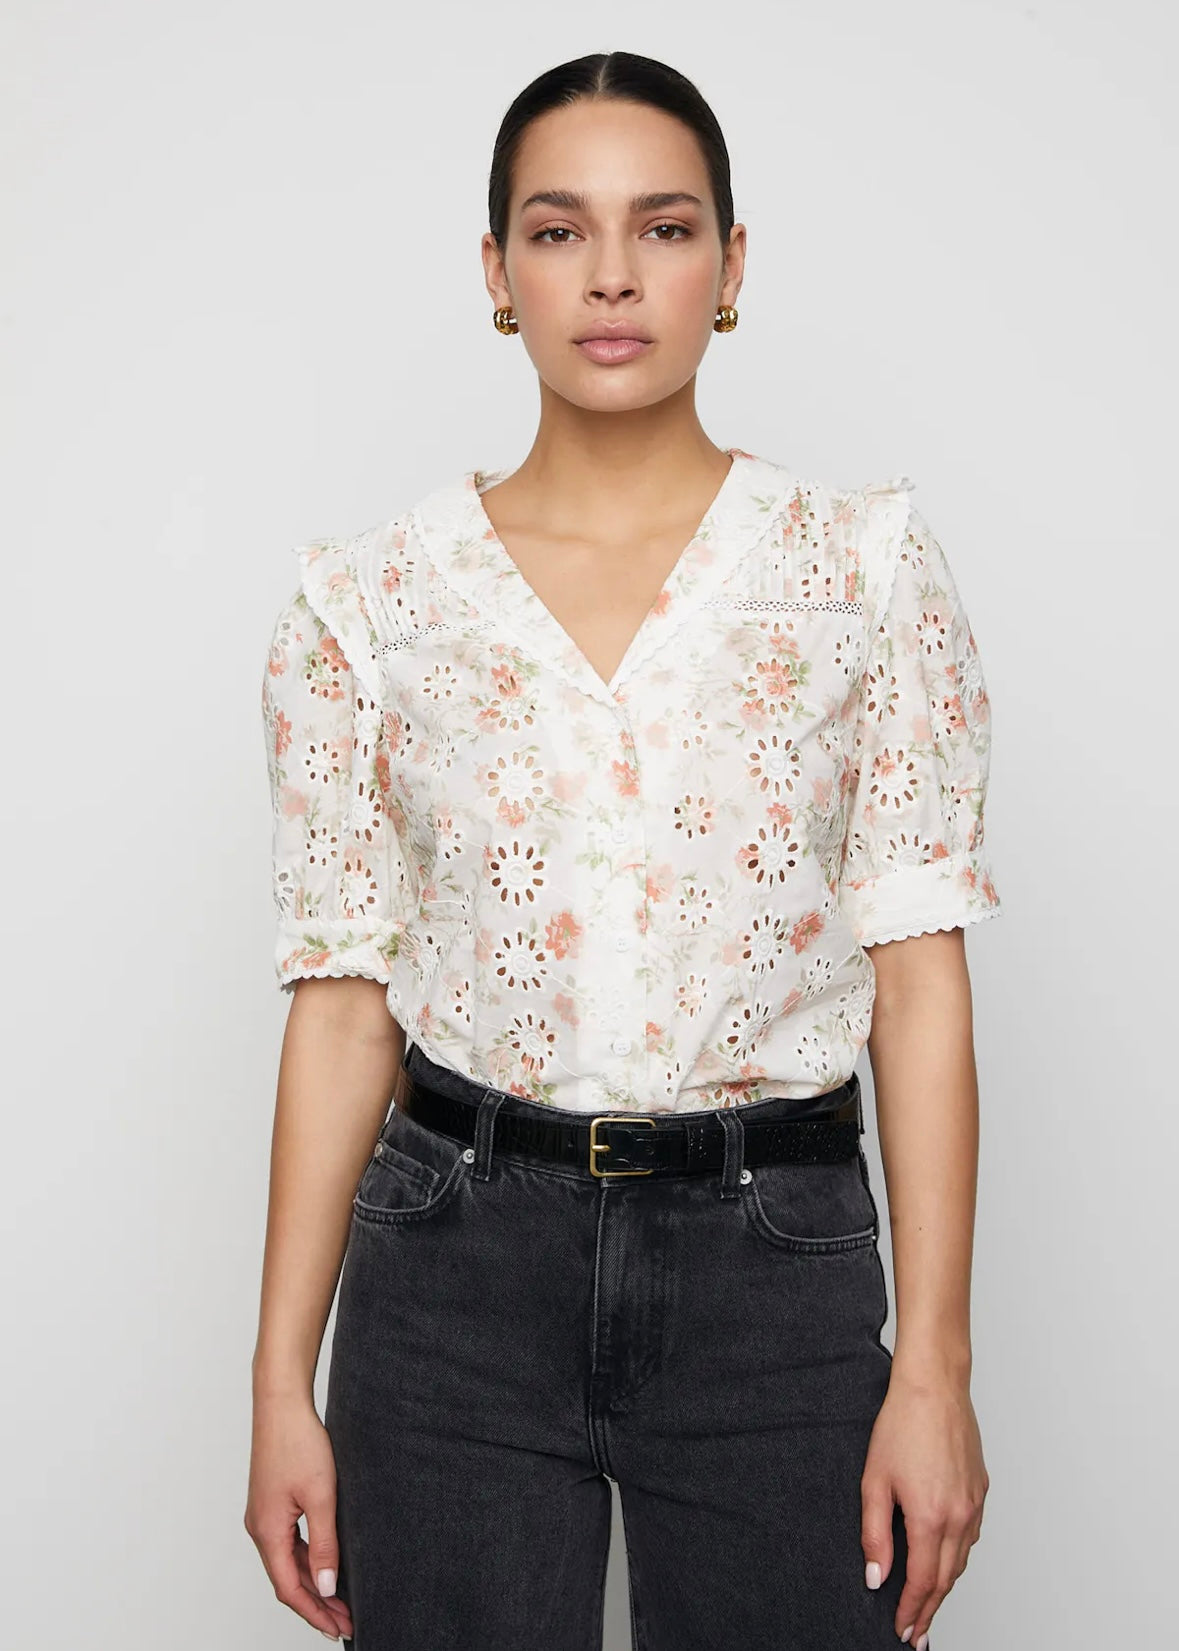 Camilla Pihl Hera blouse - White Rose Print